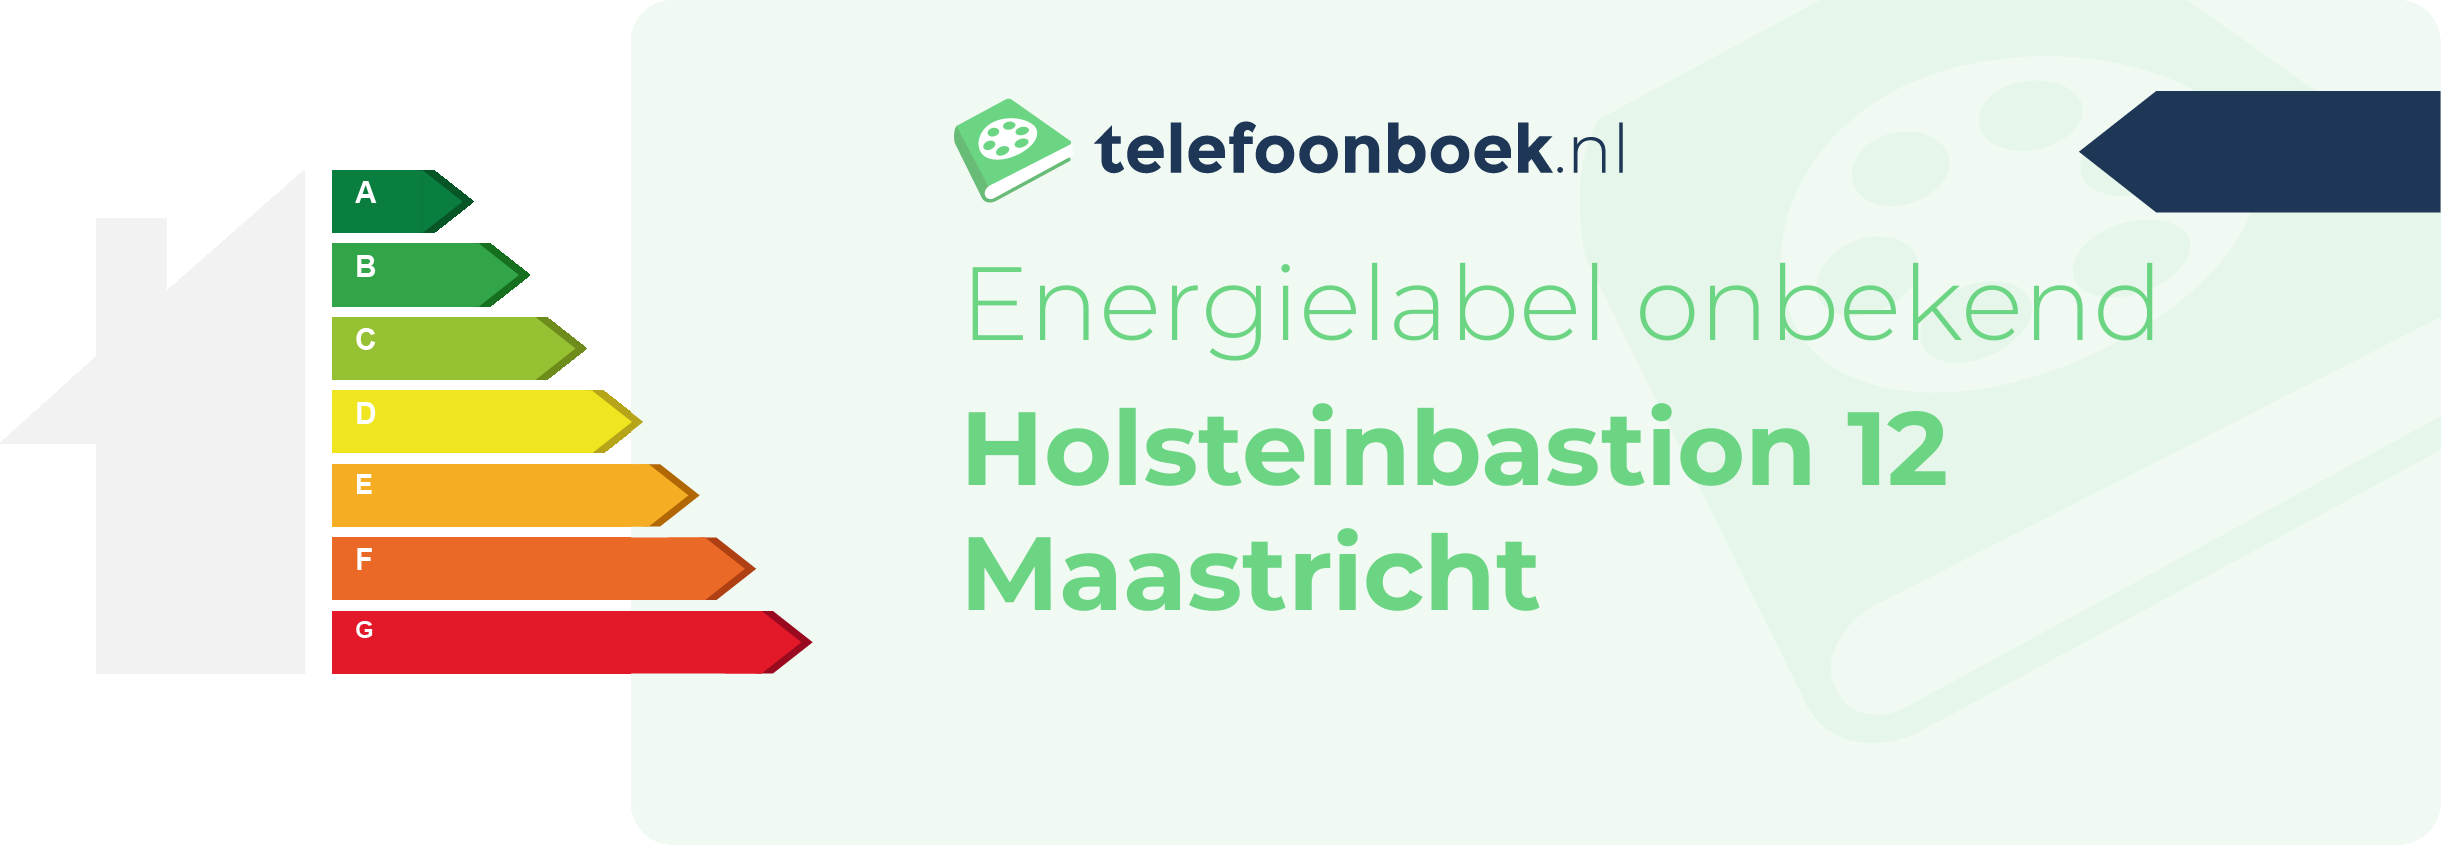 Energielabel Holsteinbastion 12 Maastricht